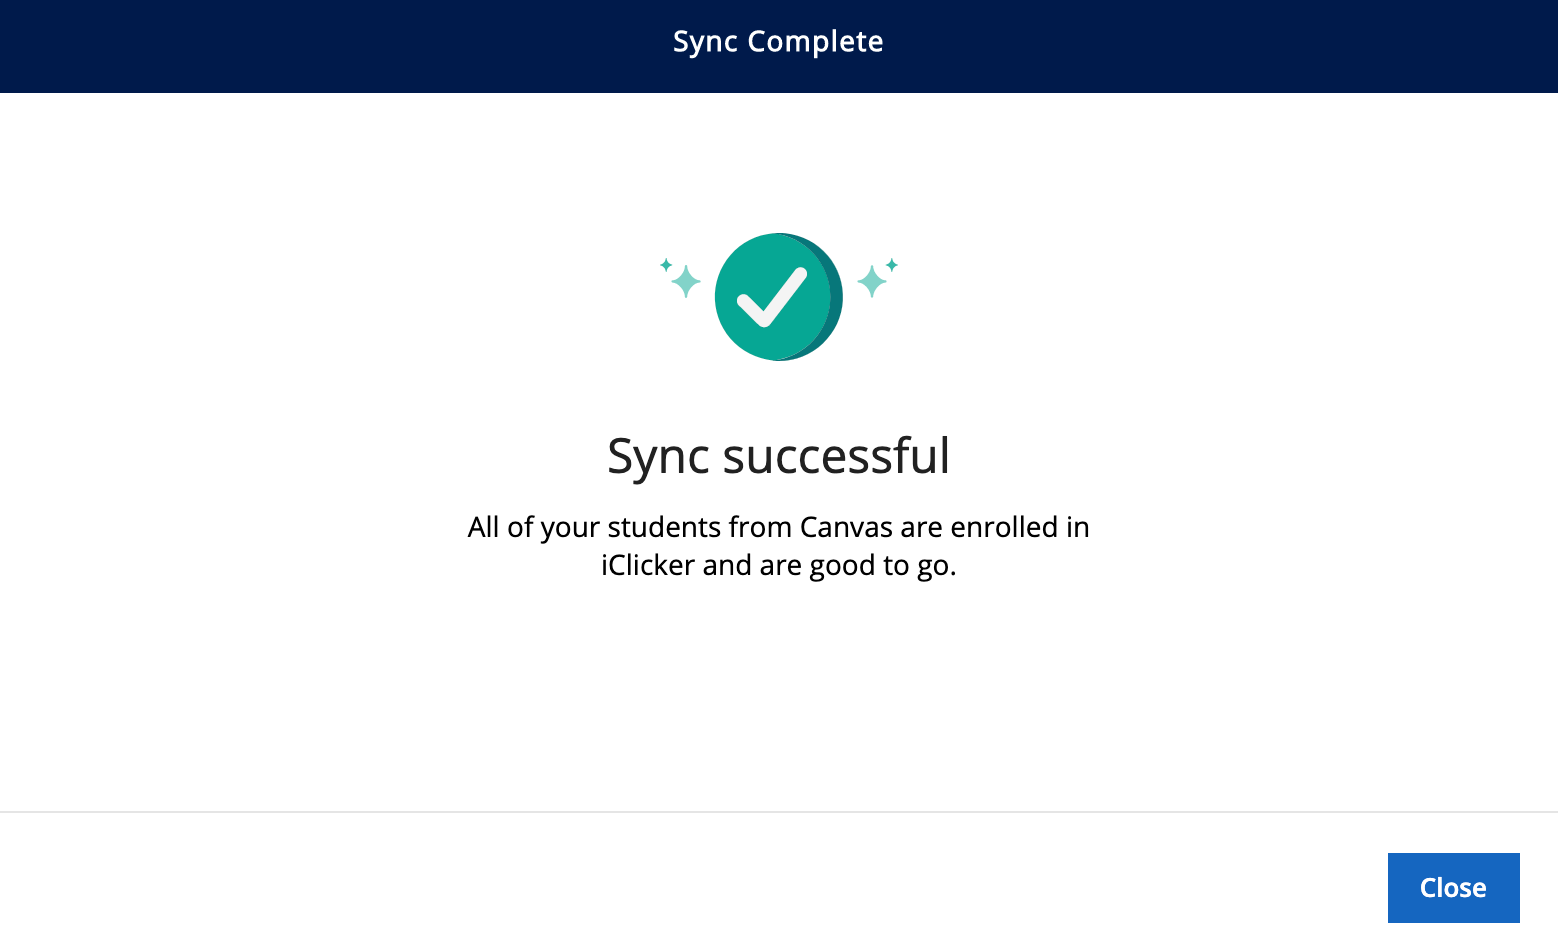 Sync successful